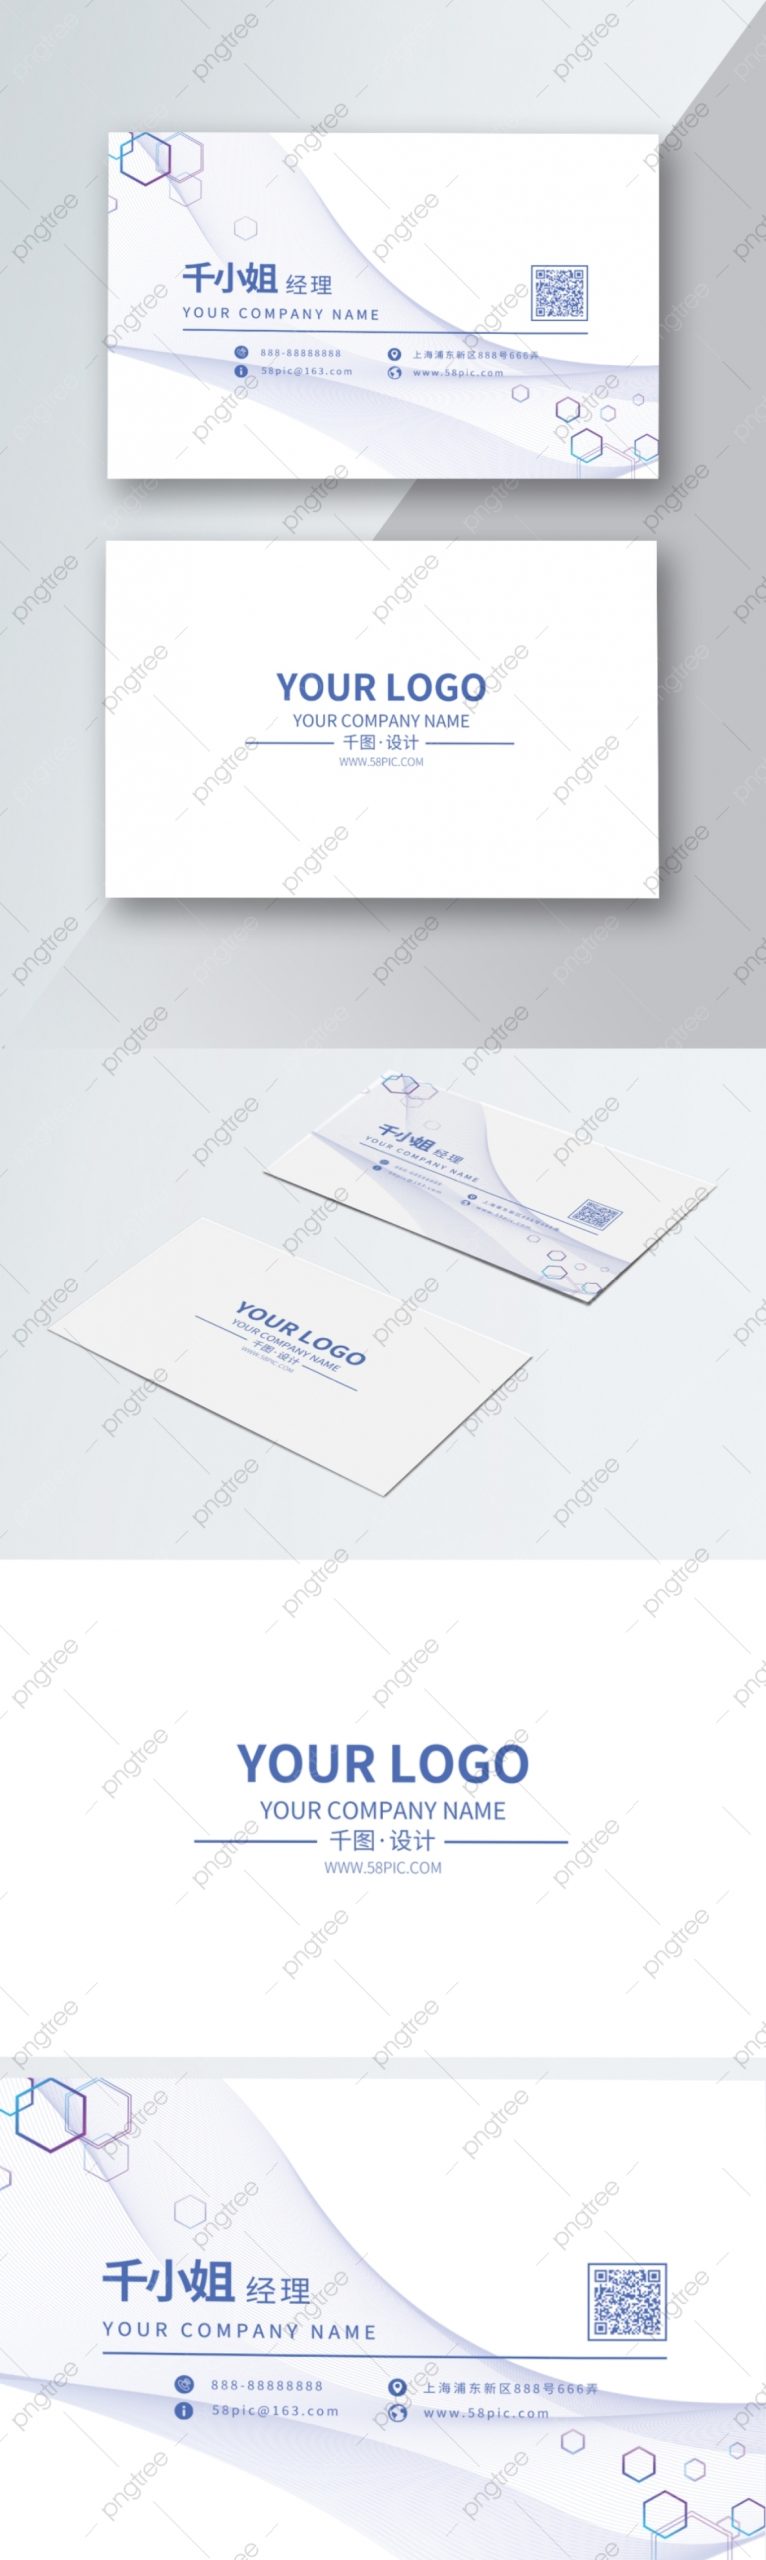 Bio Business Card Bio Technology Business Card Vector Material Bio Business Card Bio Technology For Bio Card Template